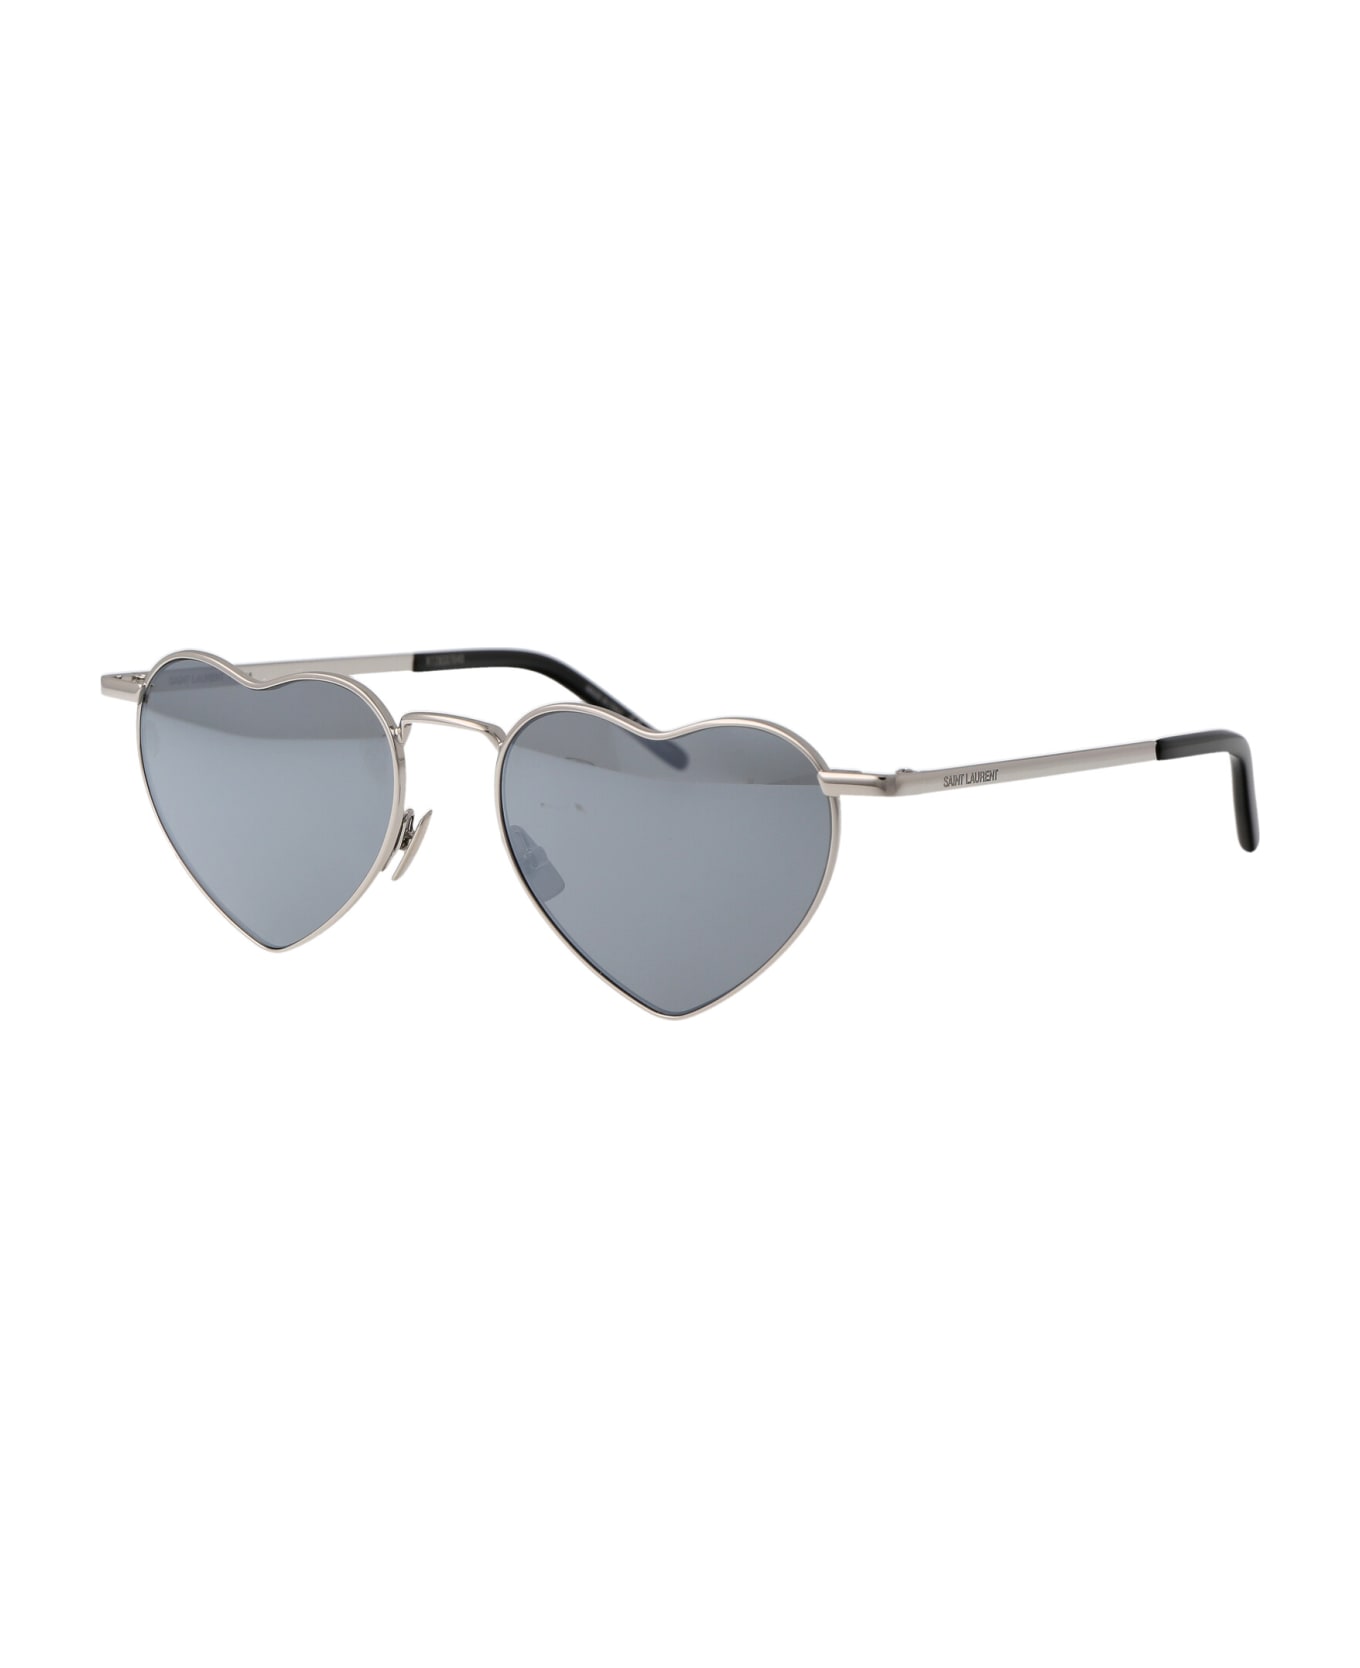 Saint Laurent Eyewear Sl 301 Loulou Sunglasses - 014 SILVER SILVER SILVER